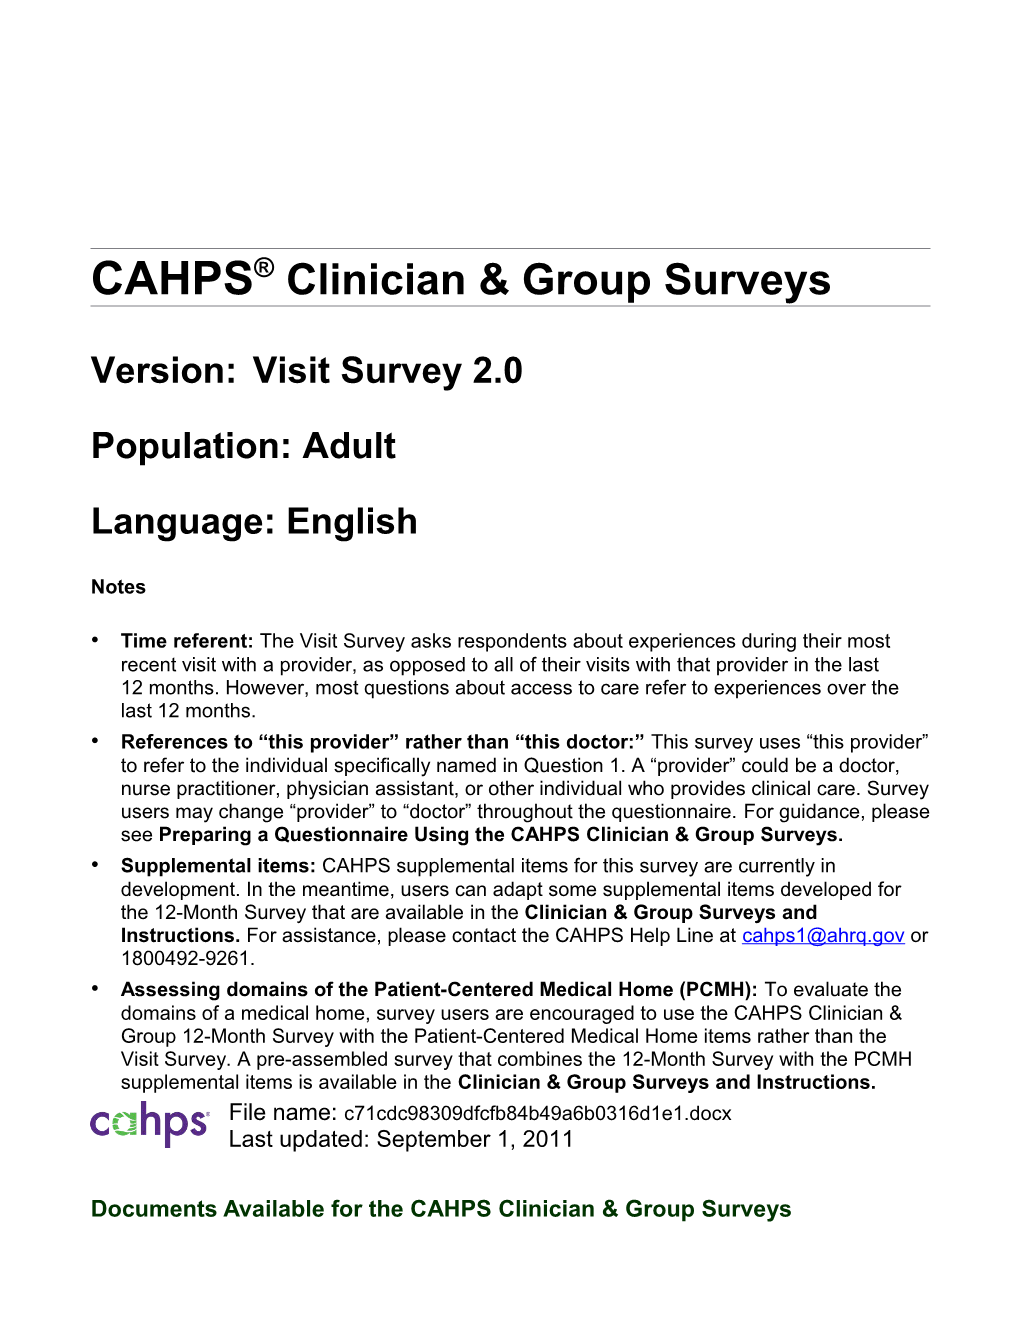 CG CAHPS Survey